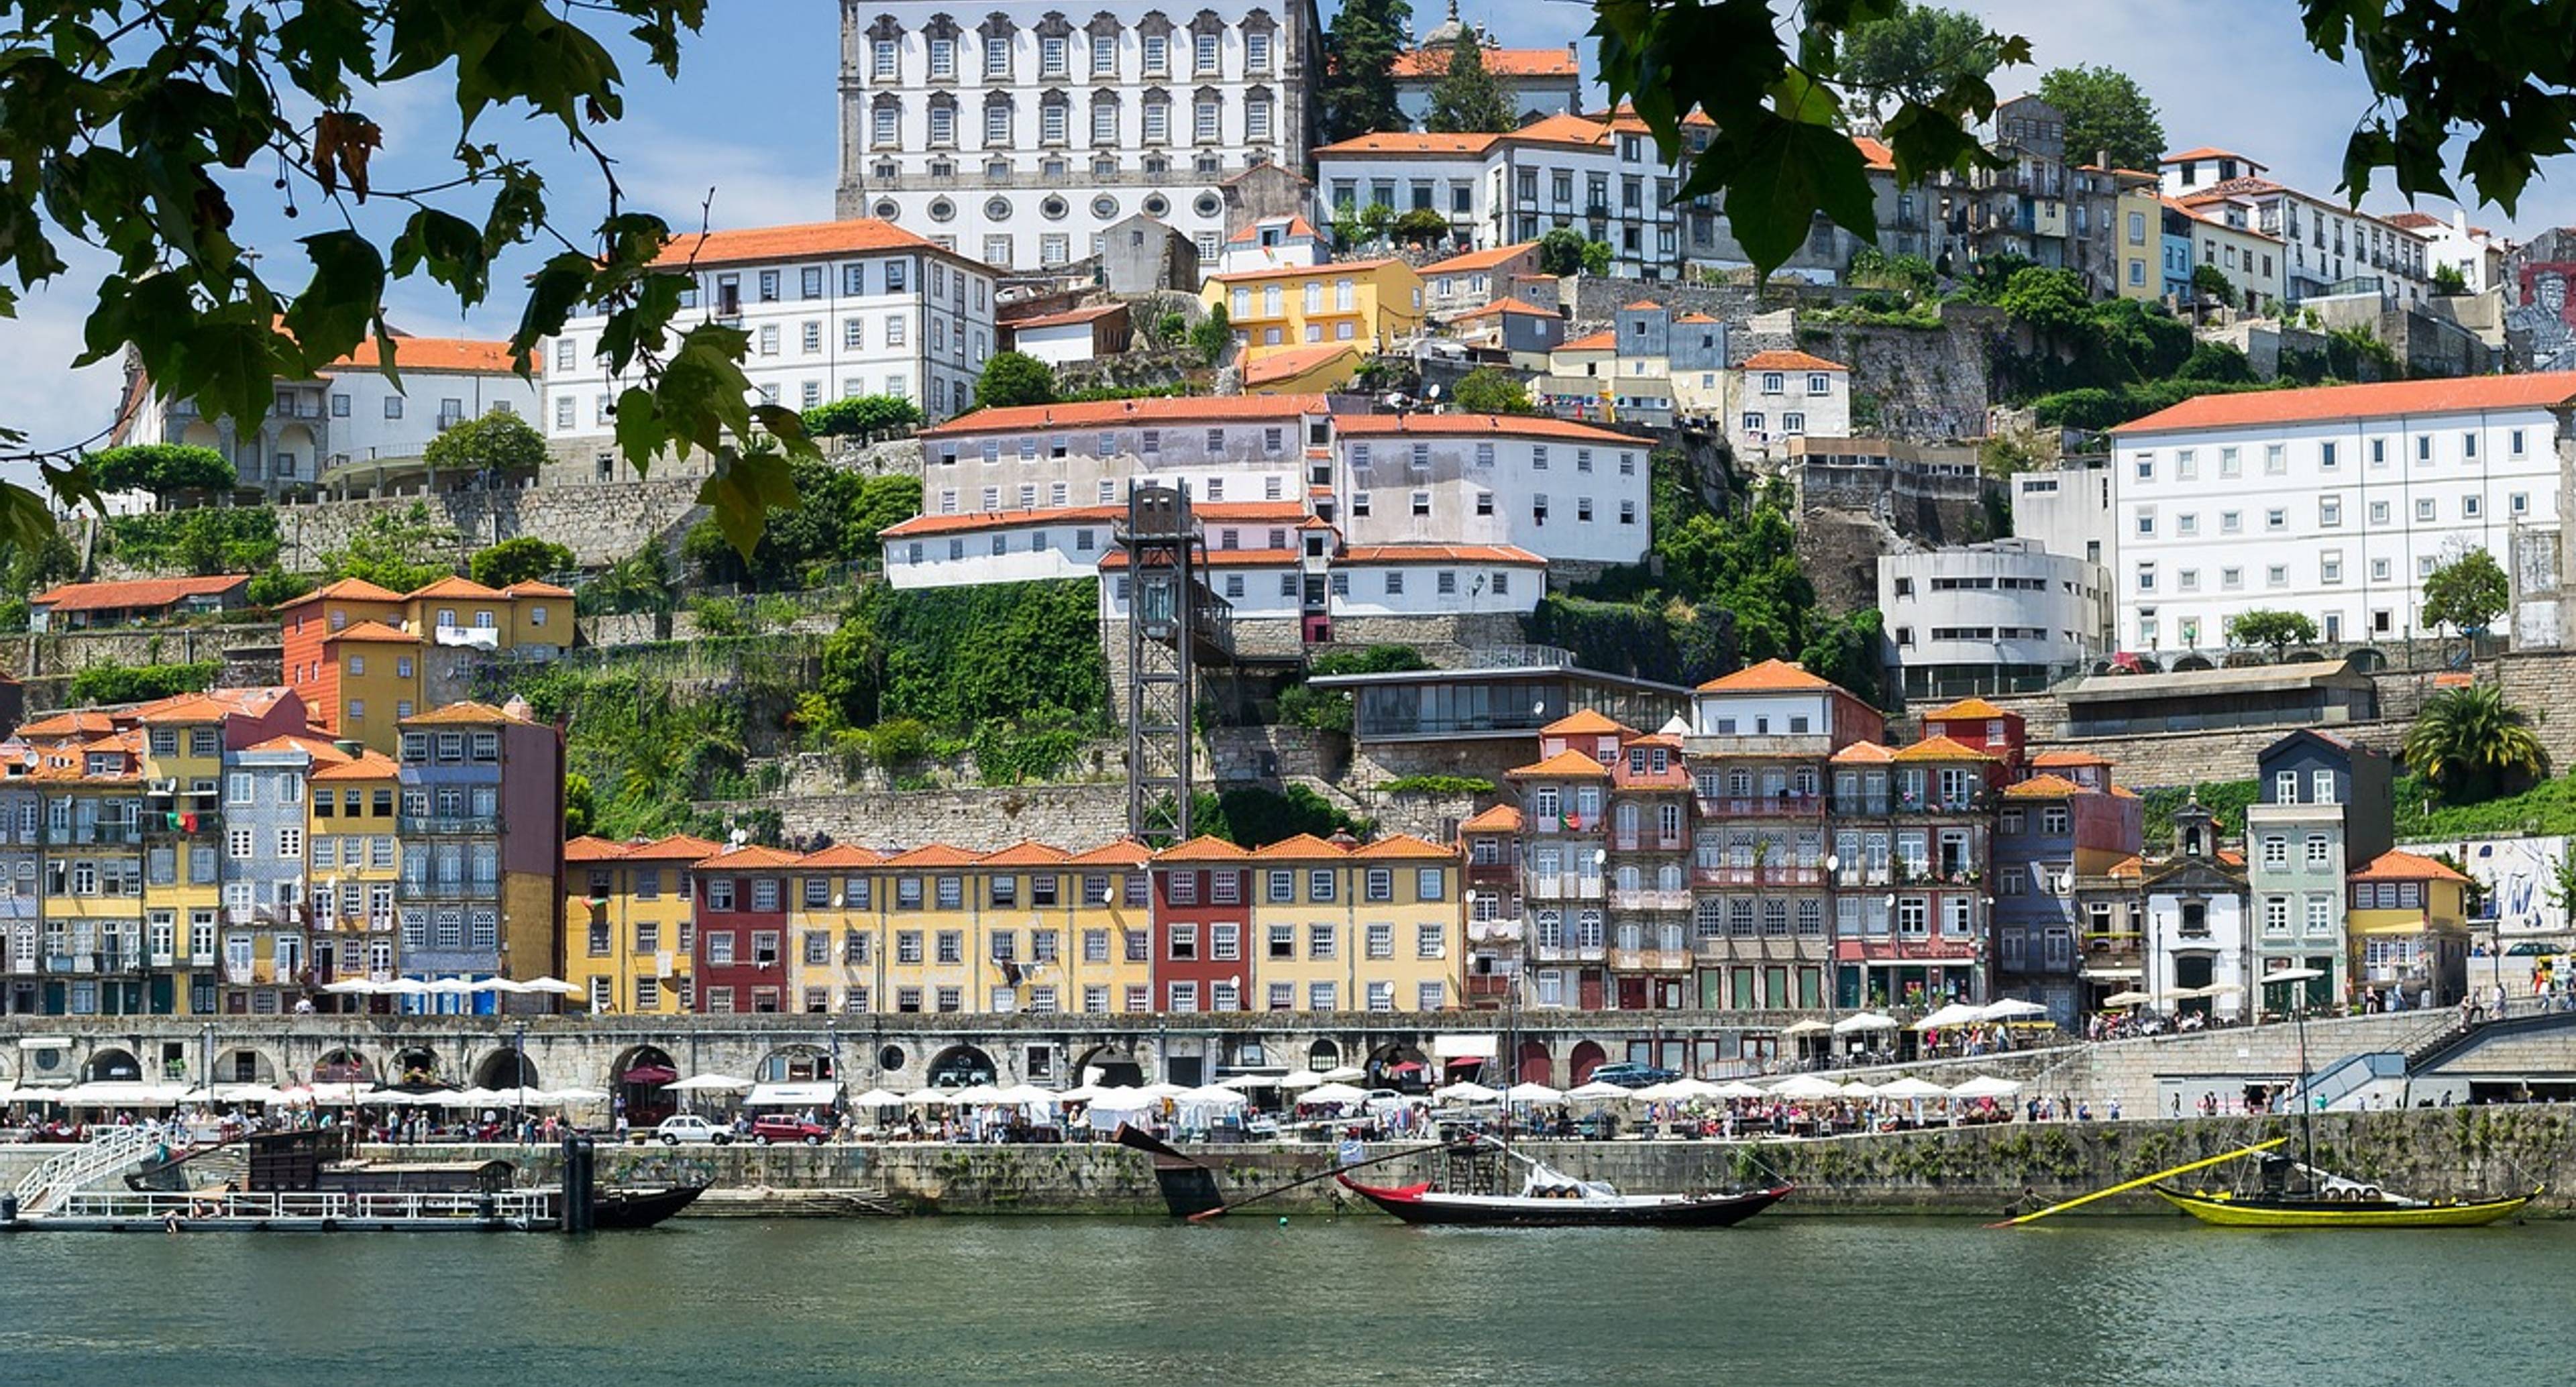 Old Porto charm